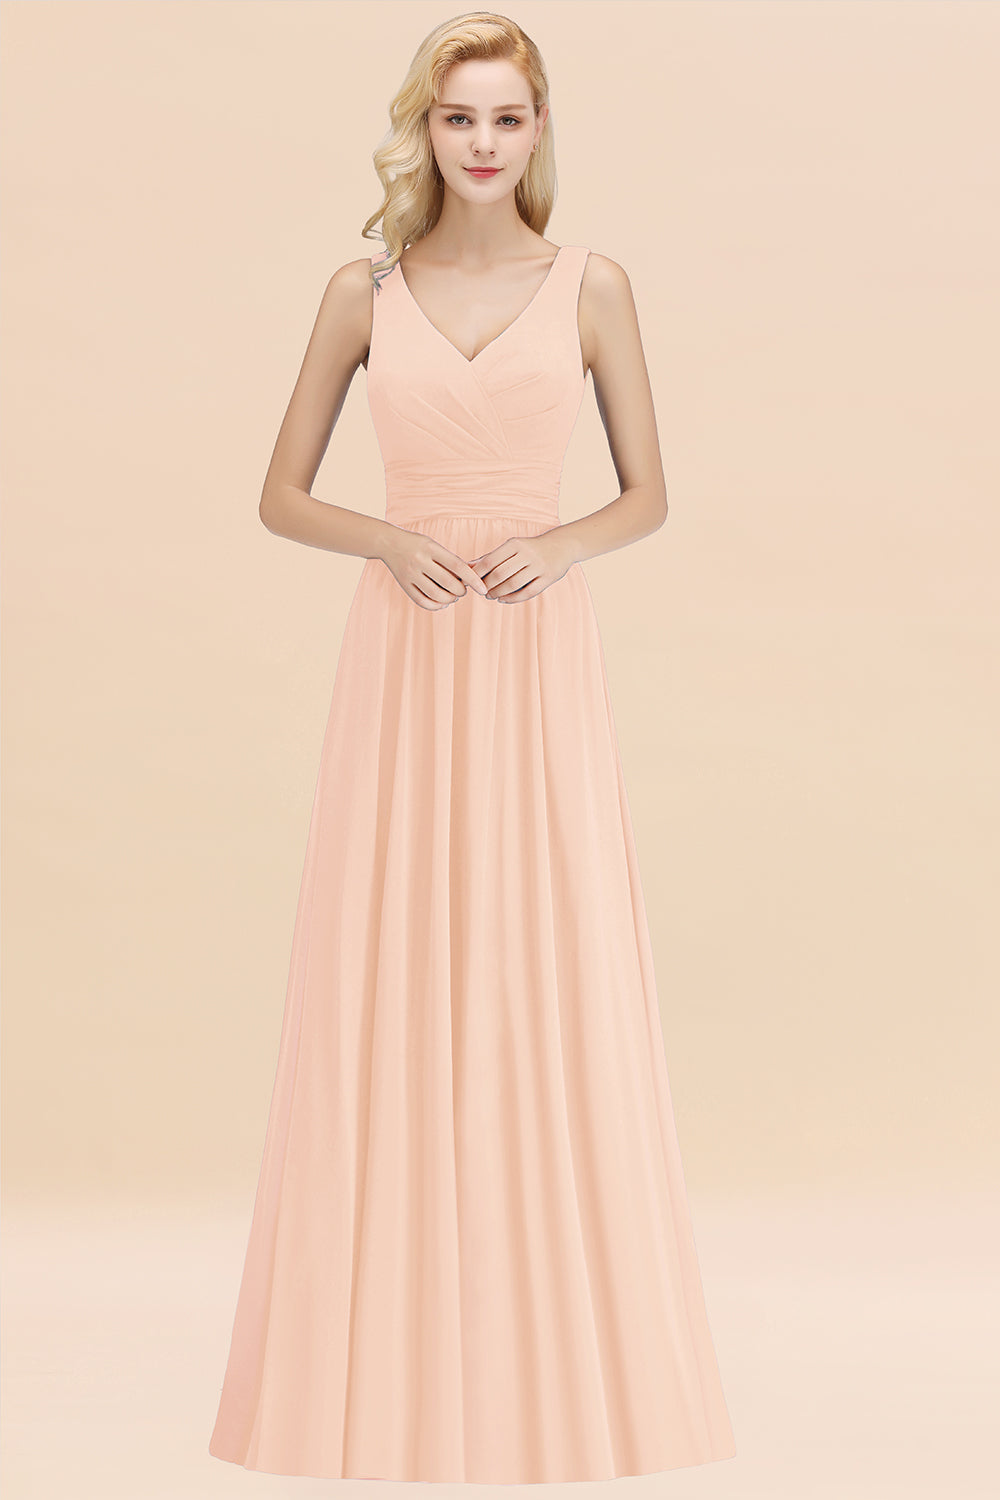 Modest Sleeveless V-Neck Long Chiffon Bridesmaid Dress Online with Ruffle